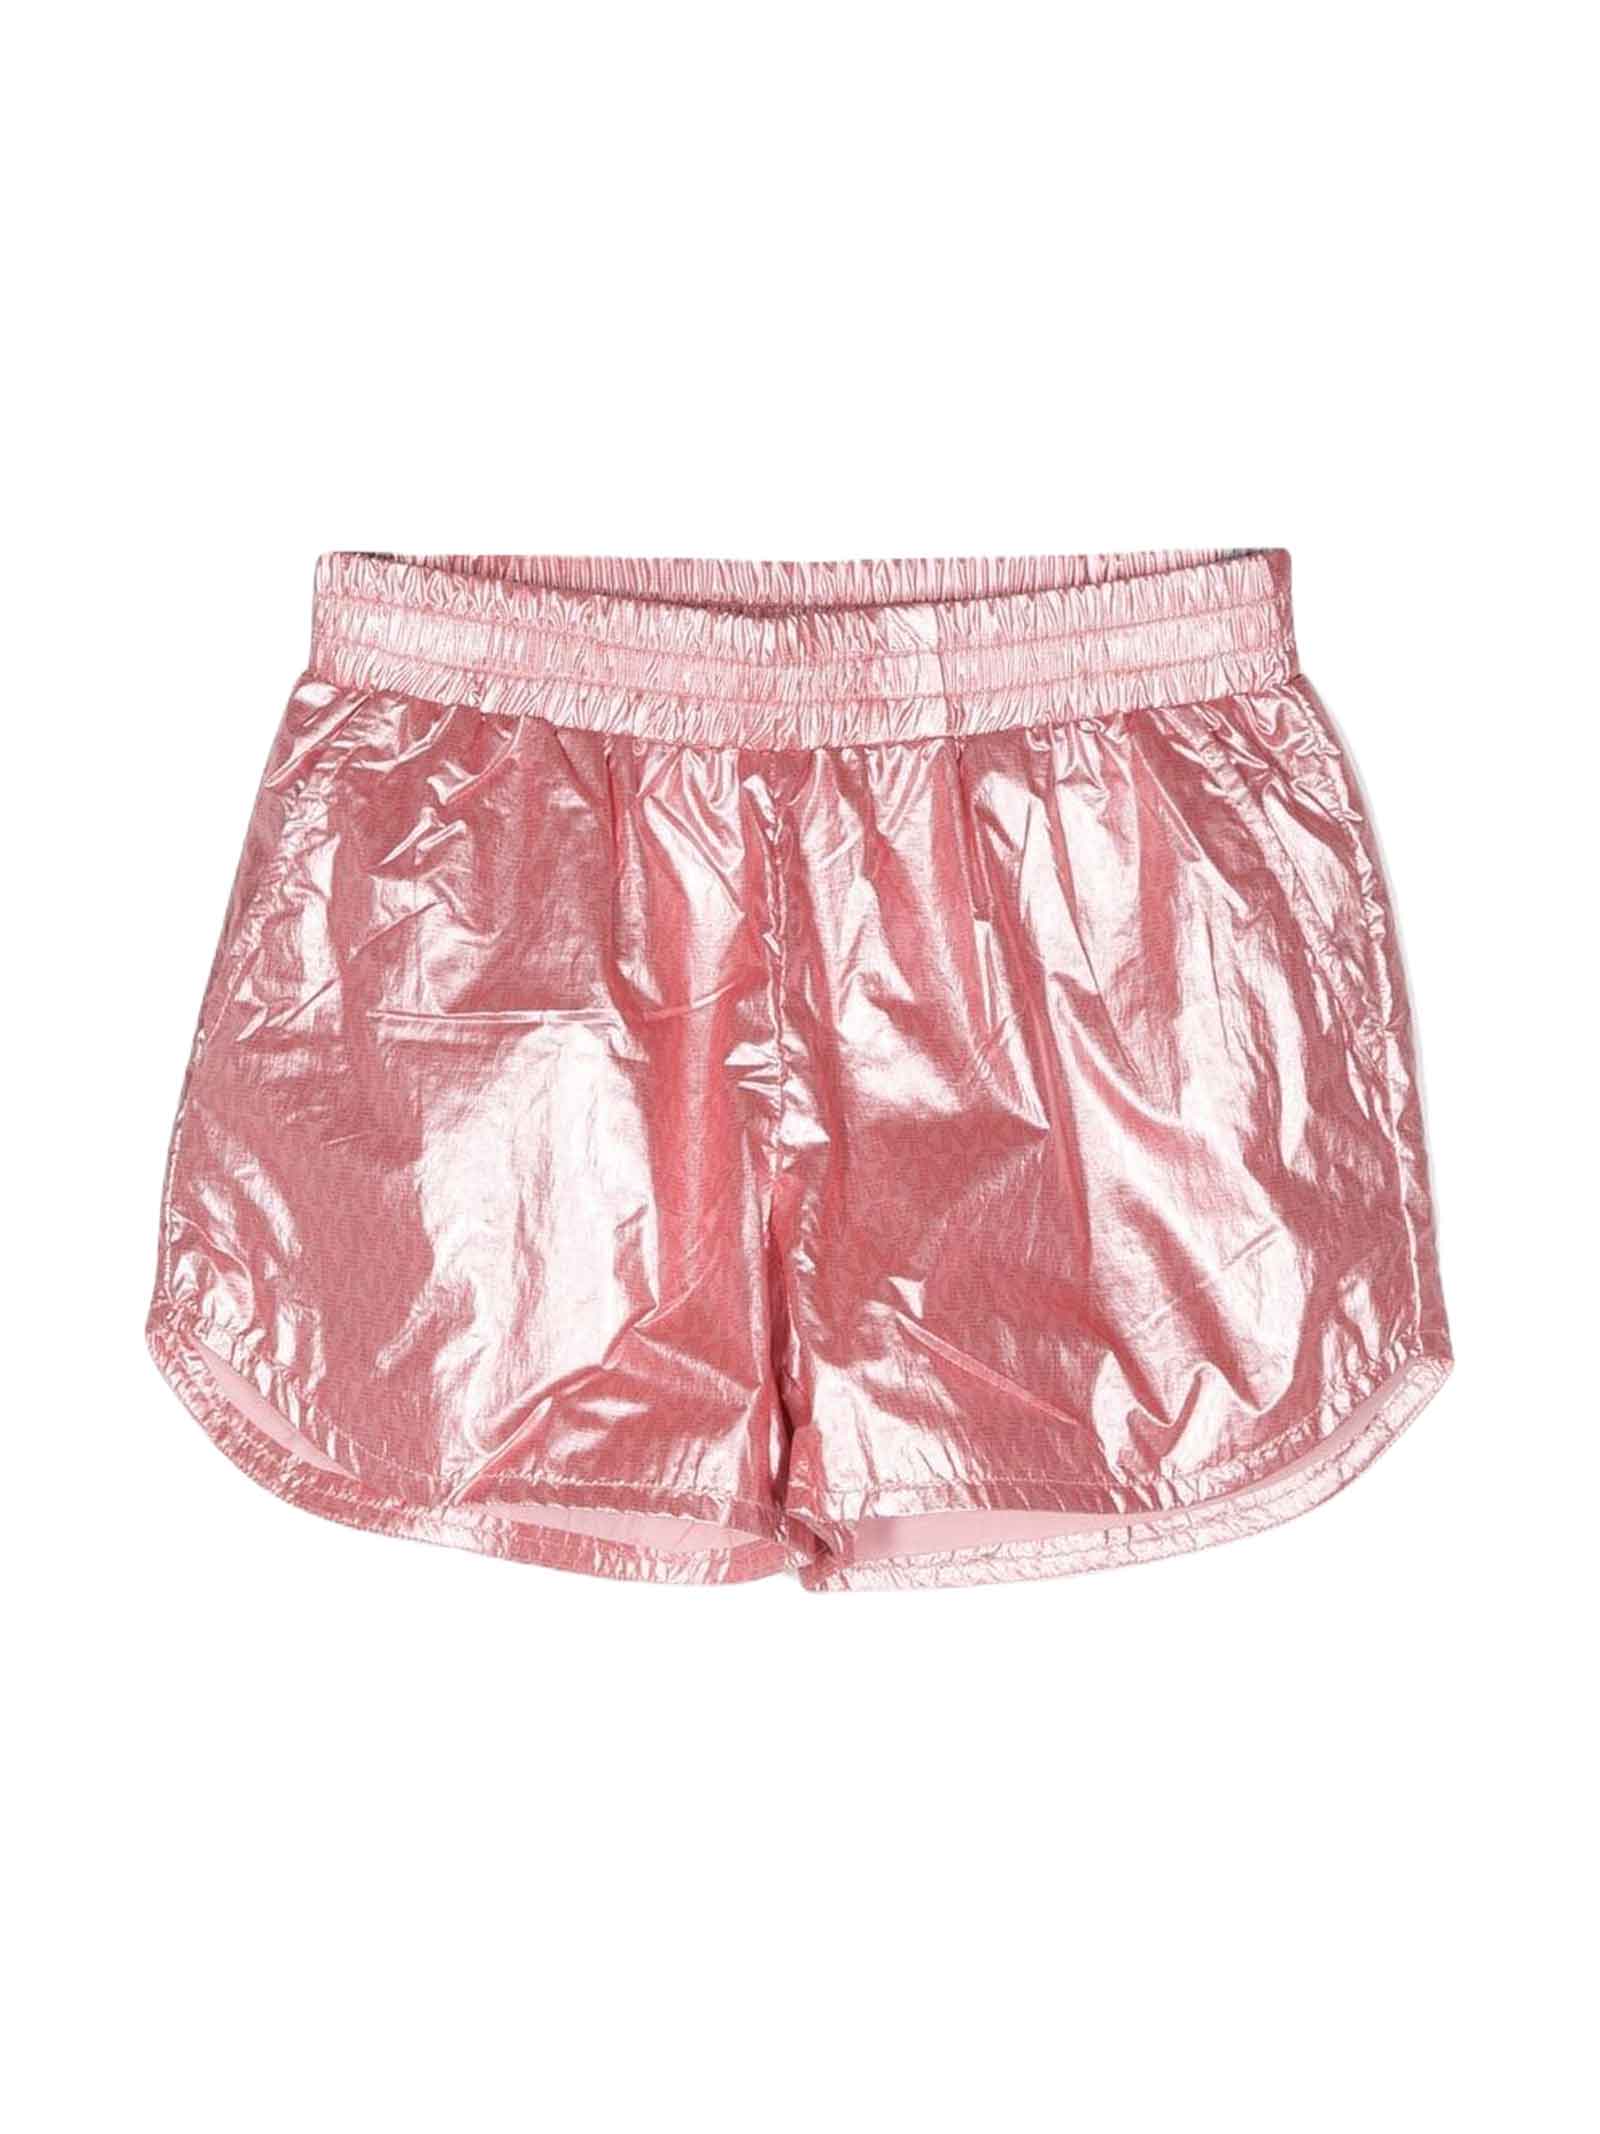 Michael Kors Pink Shorts Girl